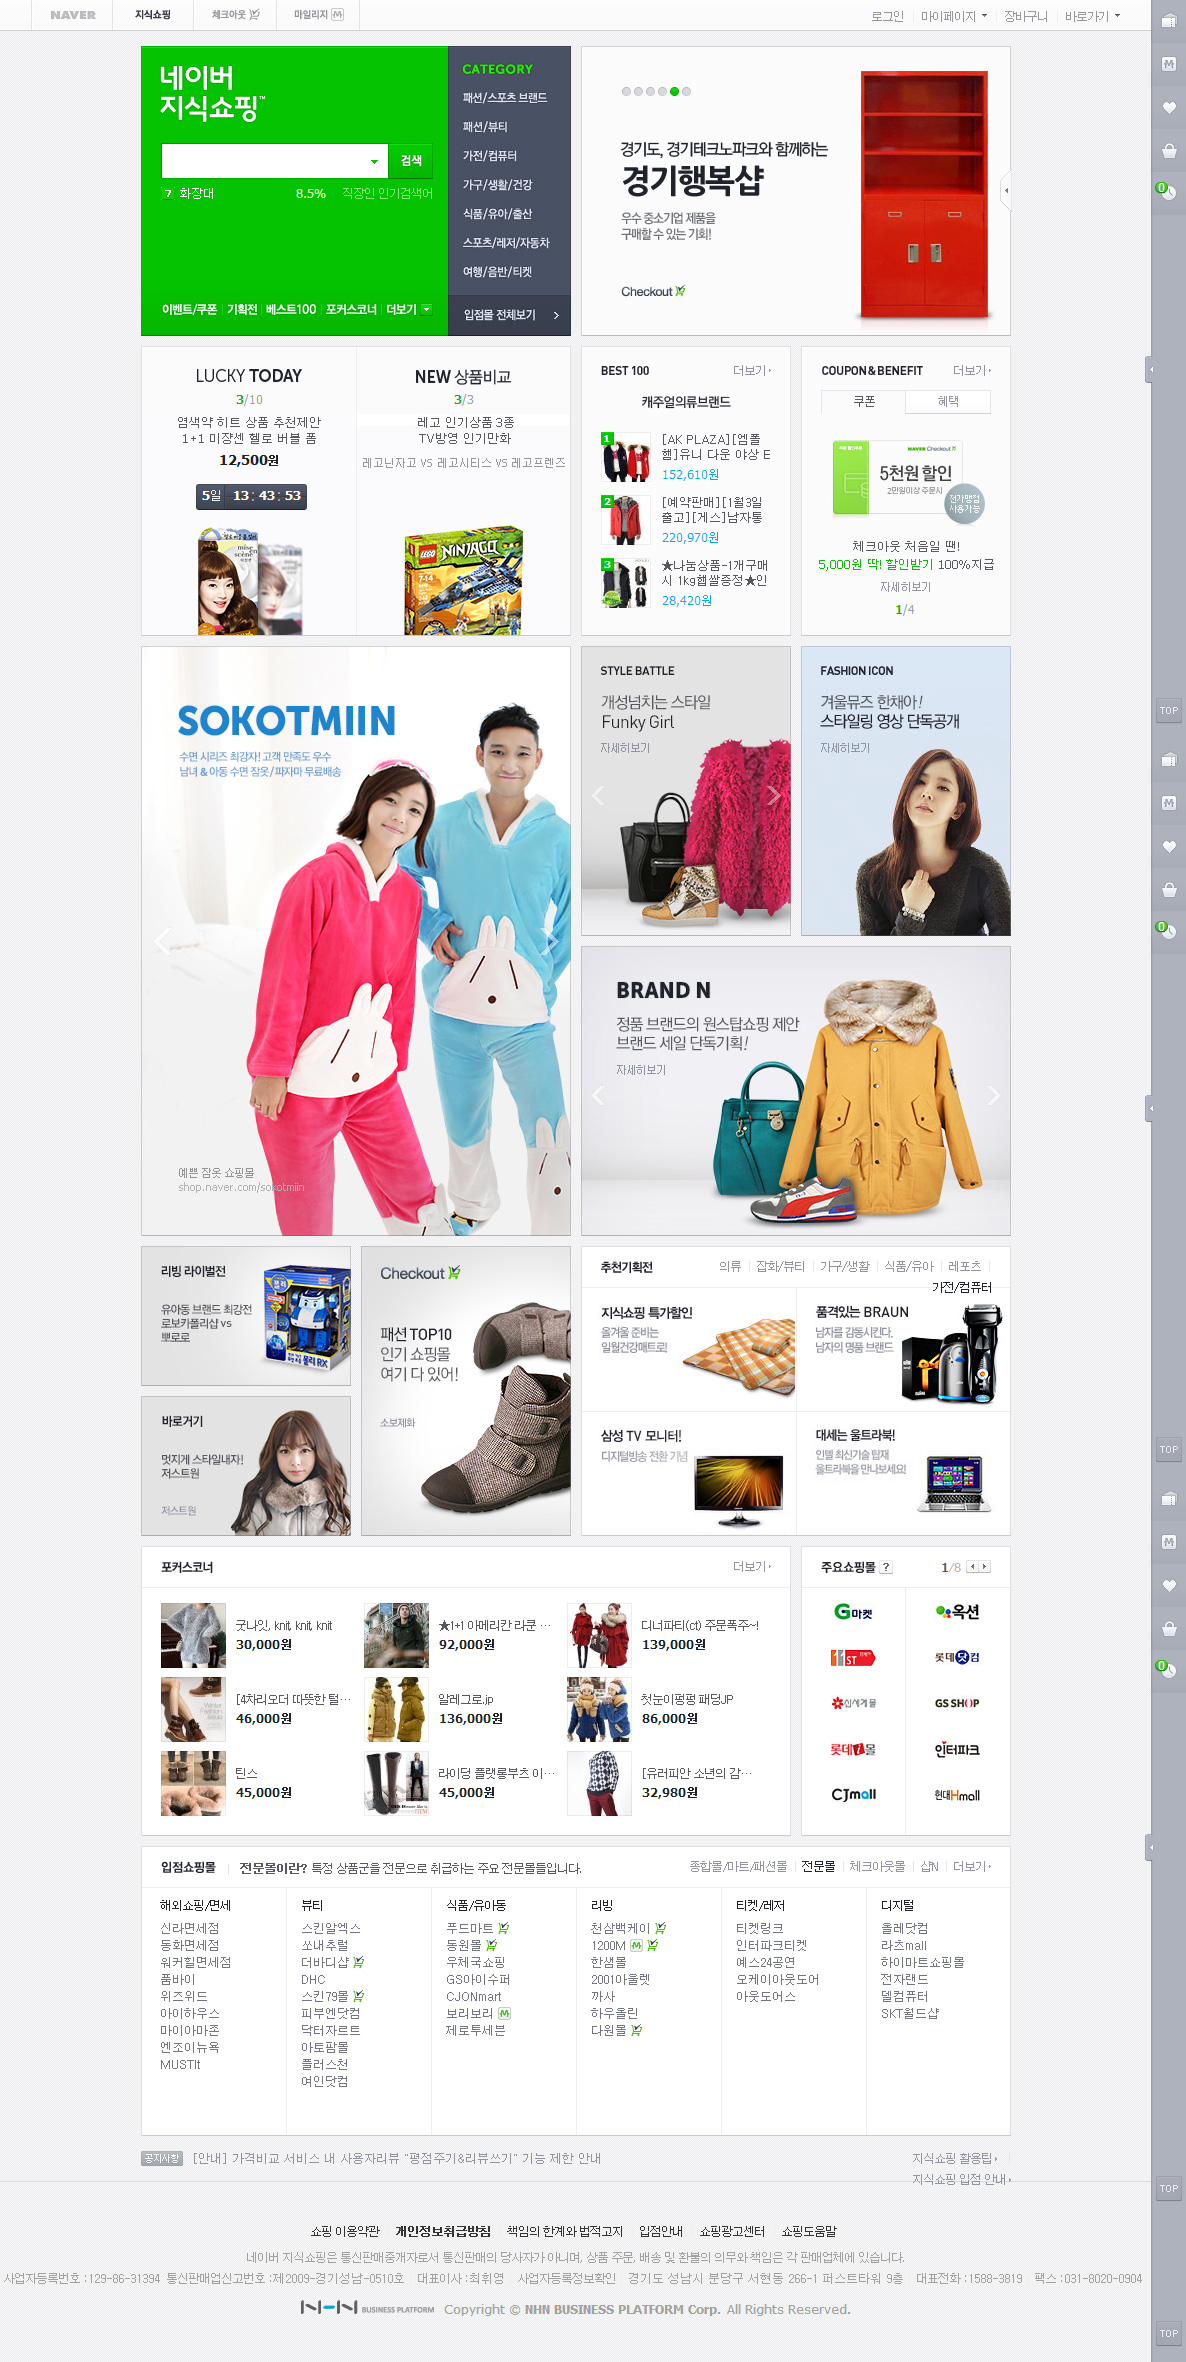 NAVER购物频道，NAVER是韩国NHN公司旗下网站。